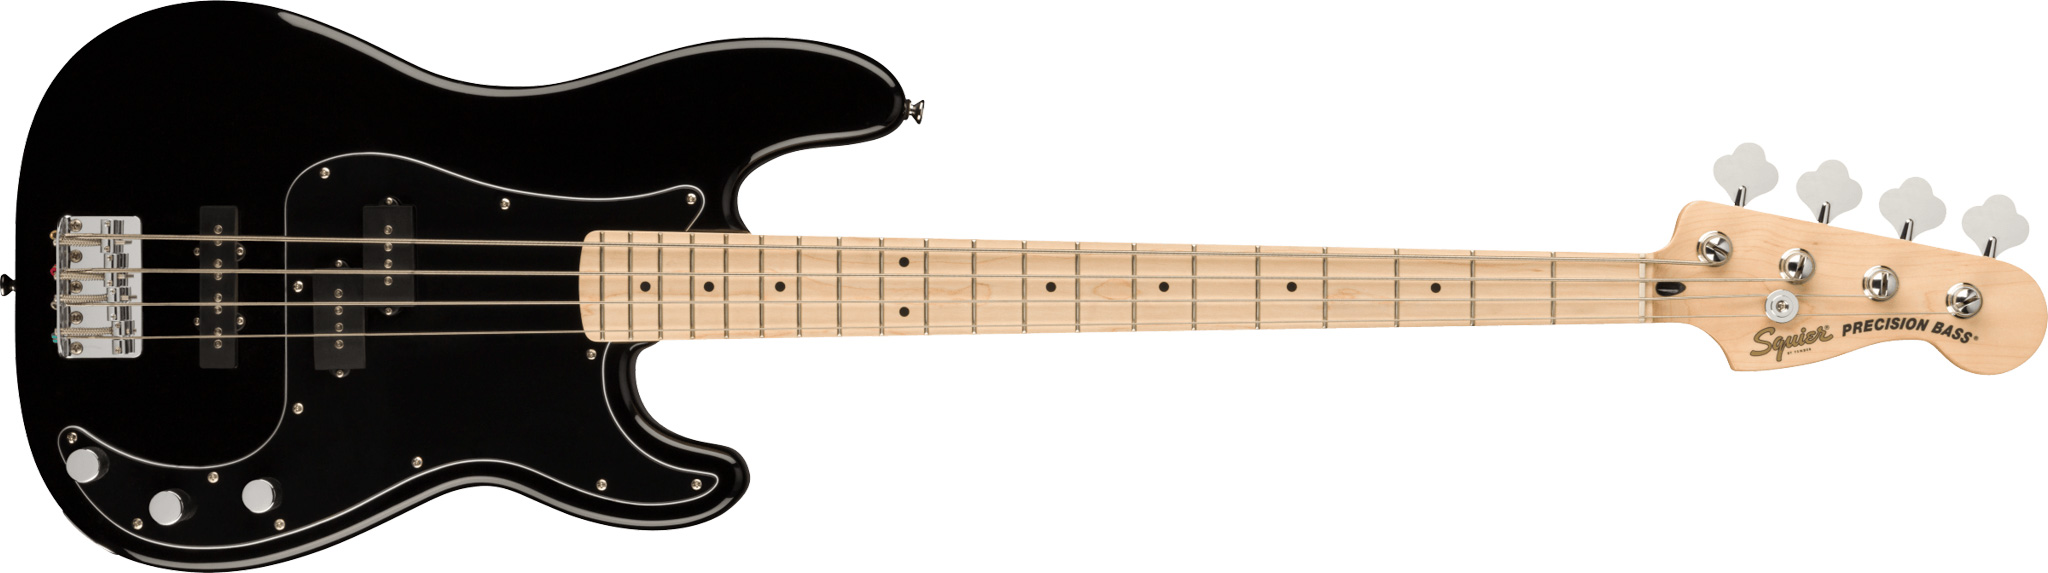 Fender Squier Affinity Precision elektrisk bass